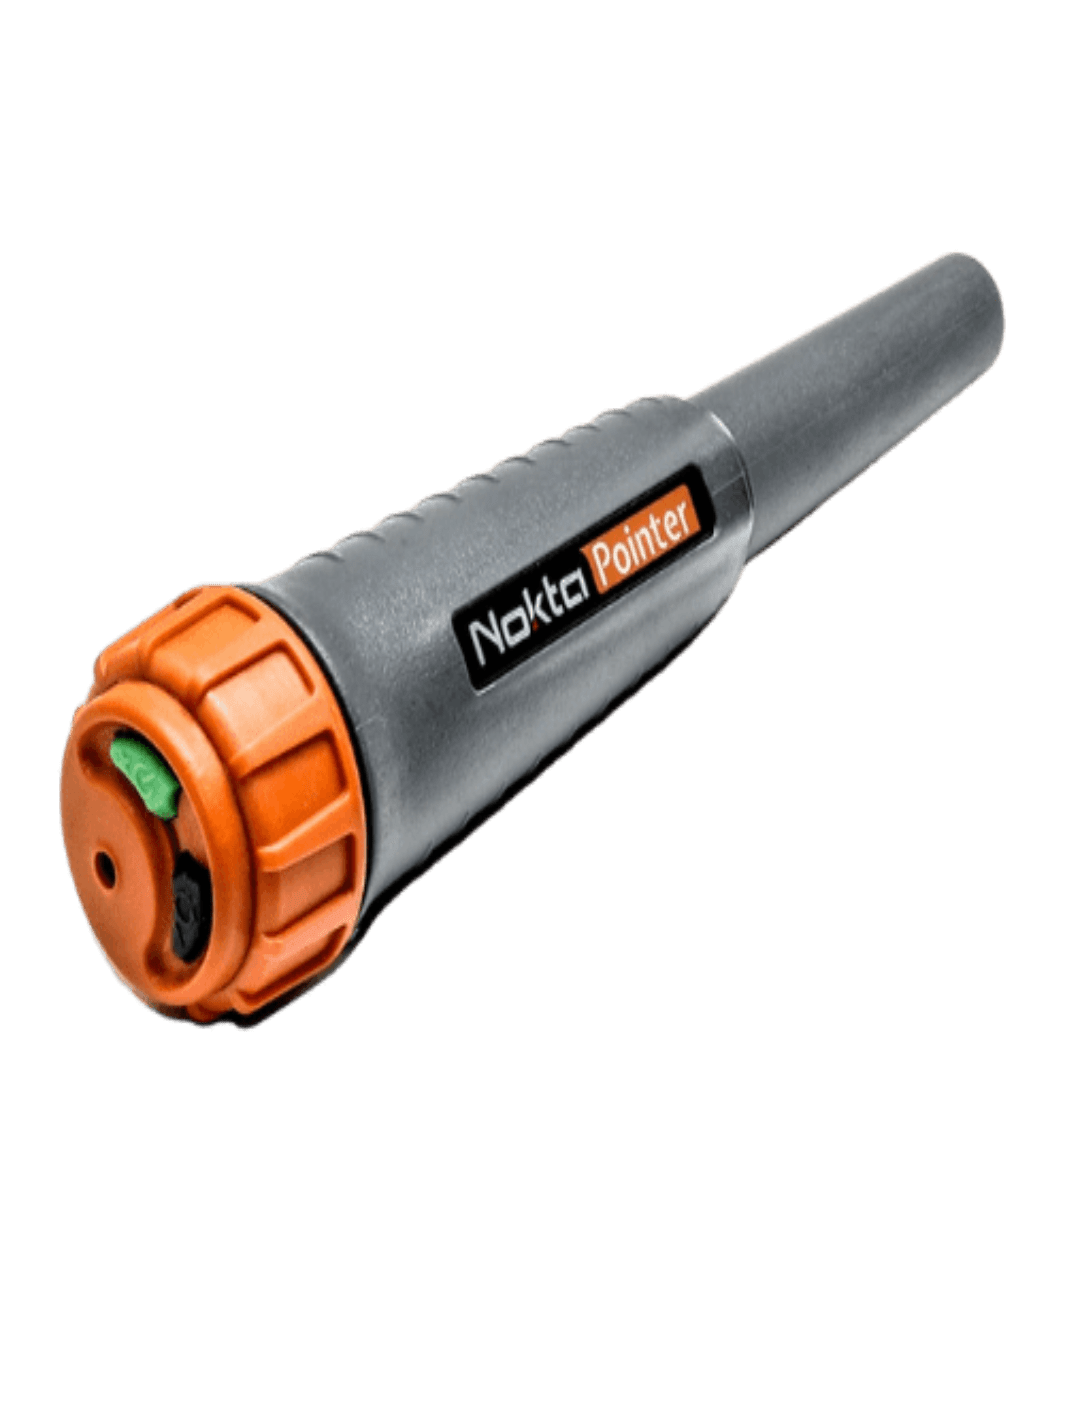 Nokta Makro Metal Detector Pinpointer - Waterproof